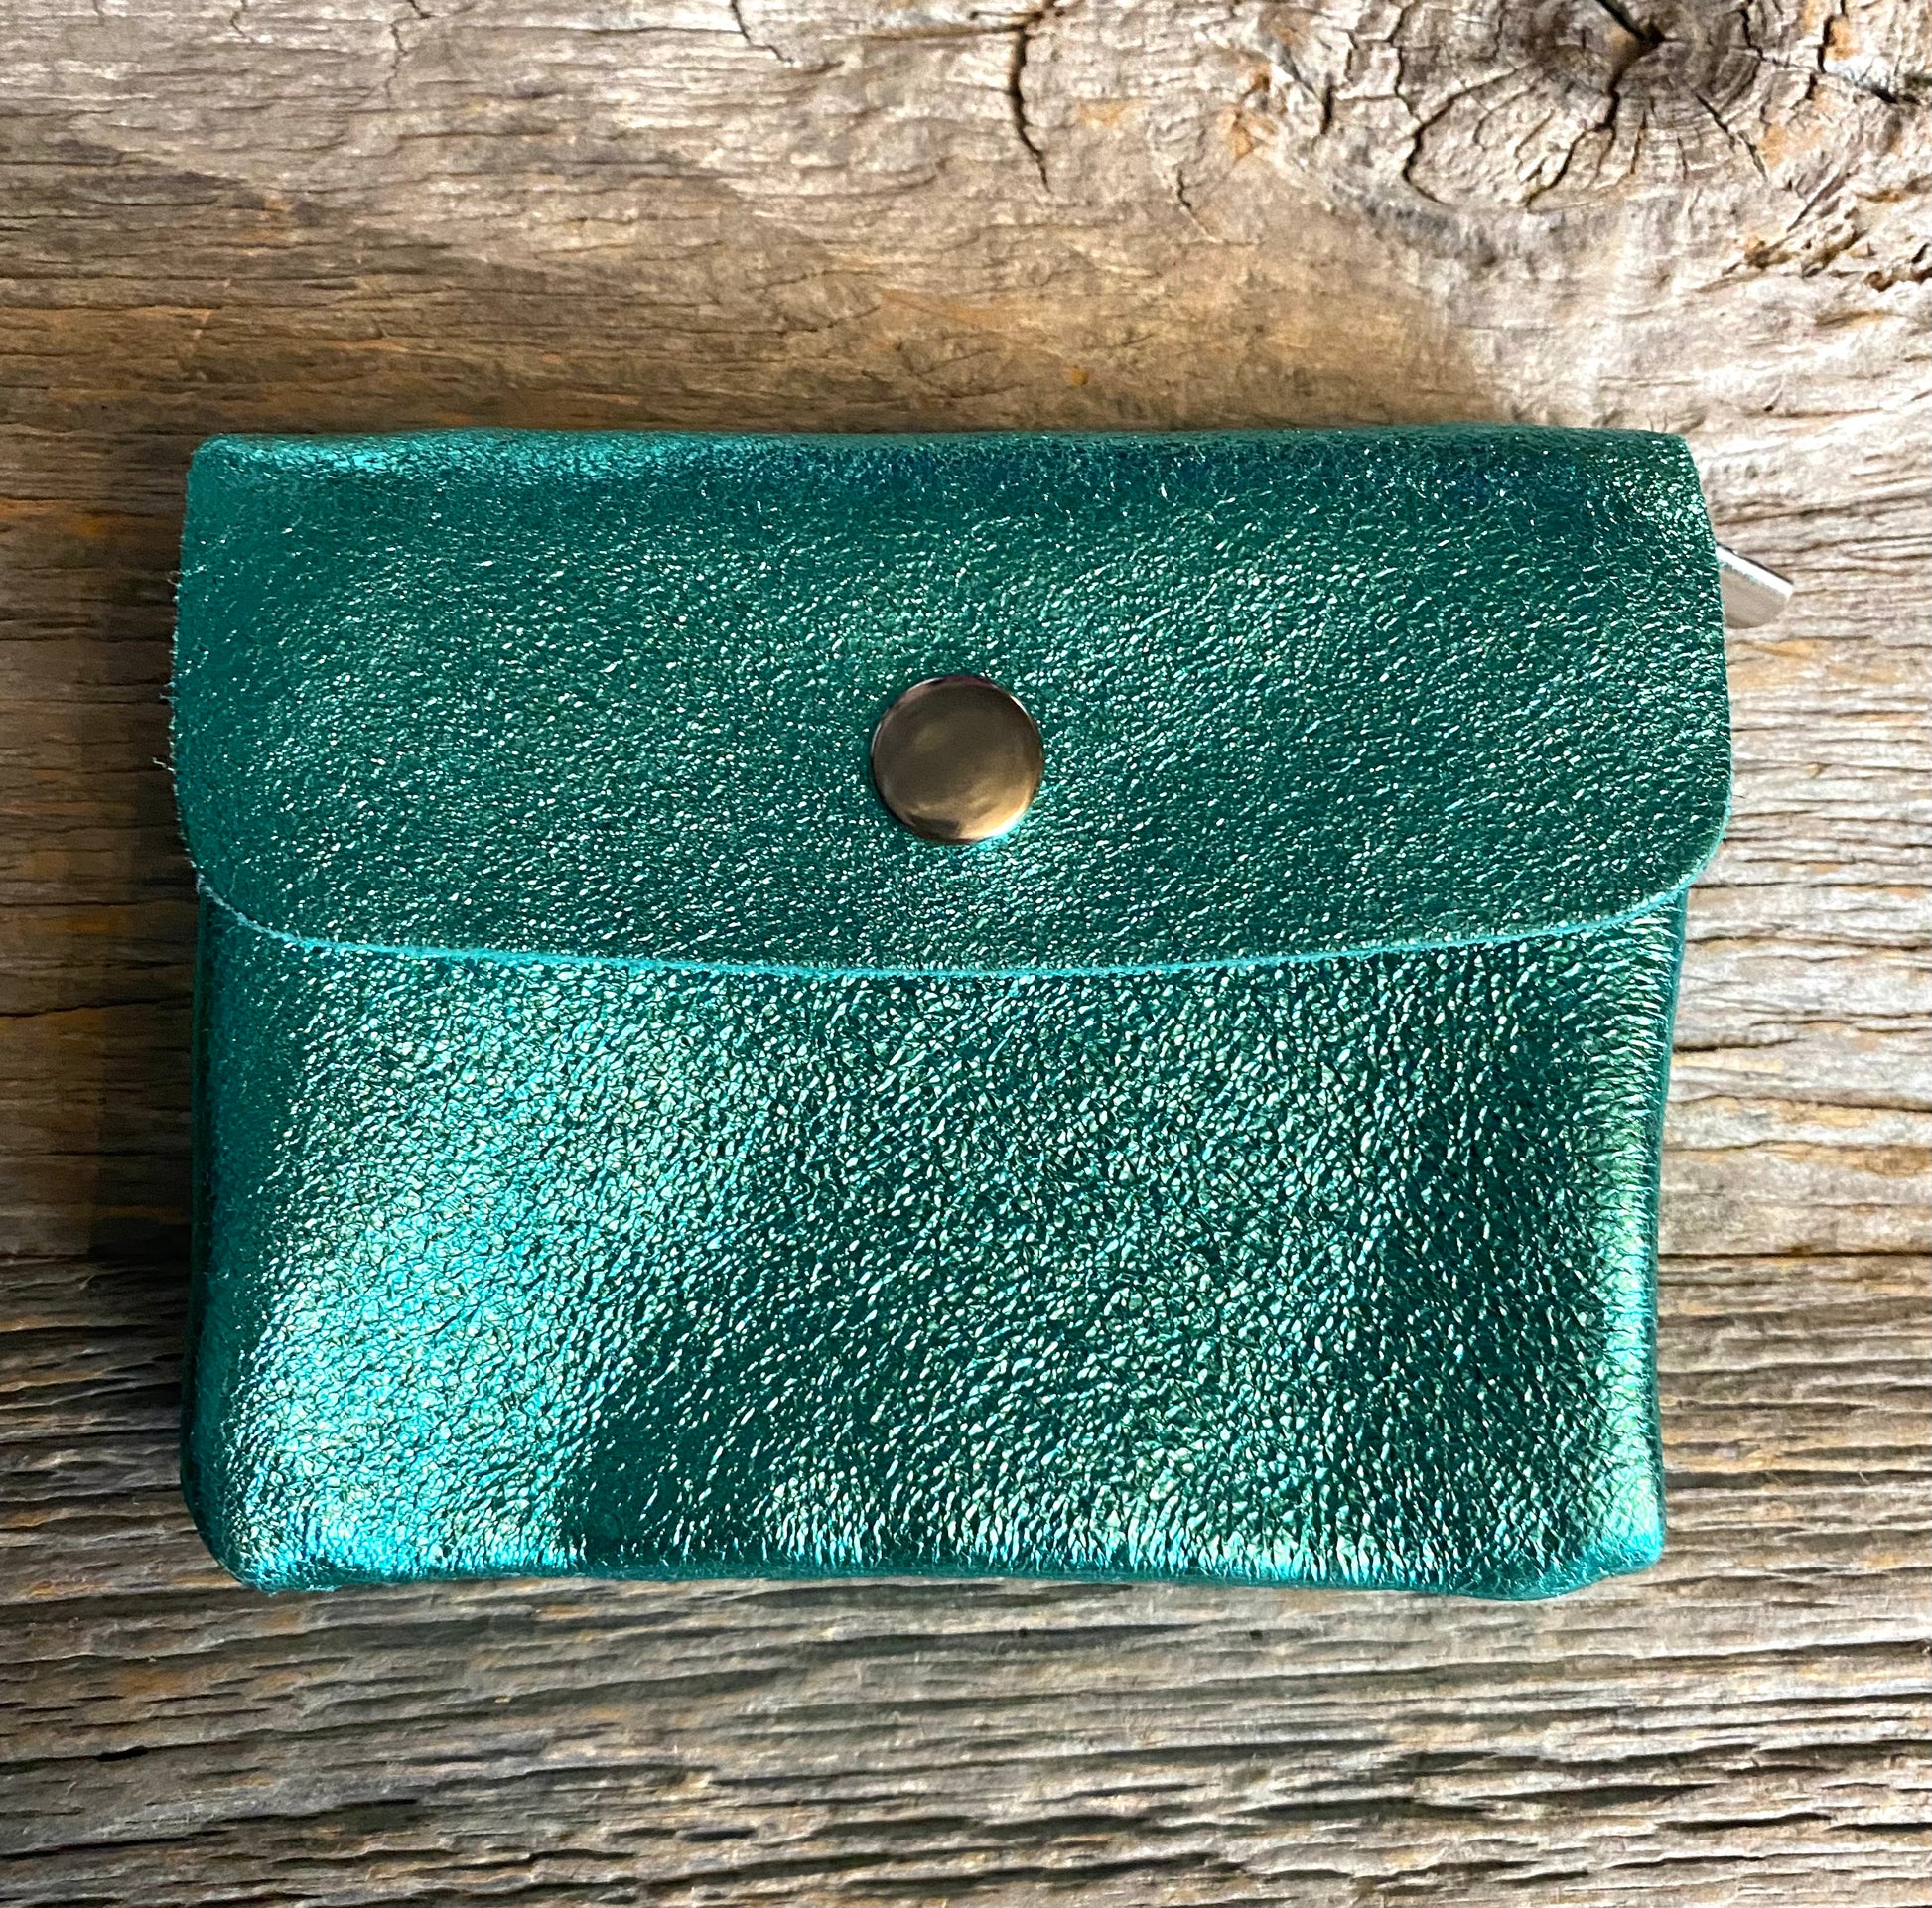 Leather wallet - Metallic Green 